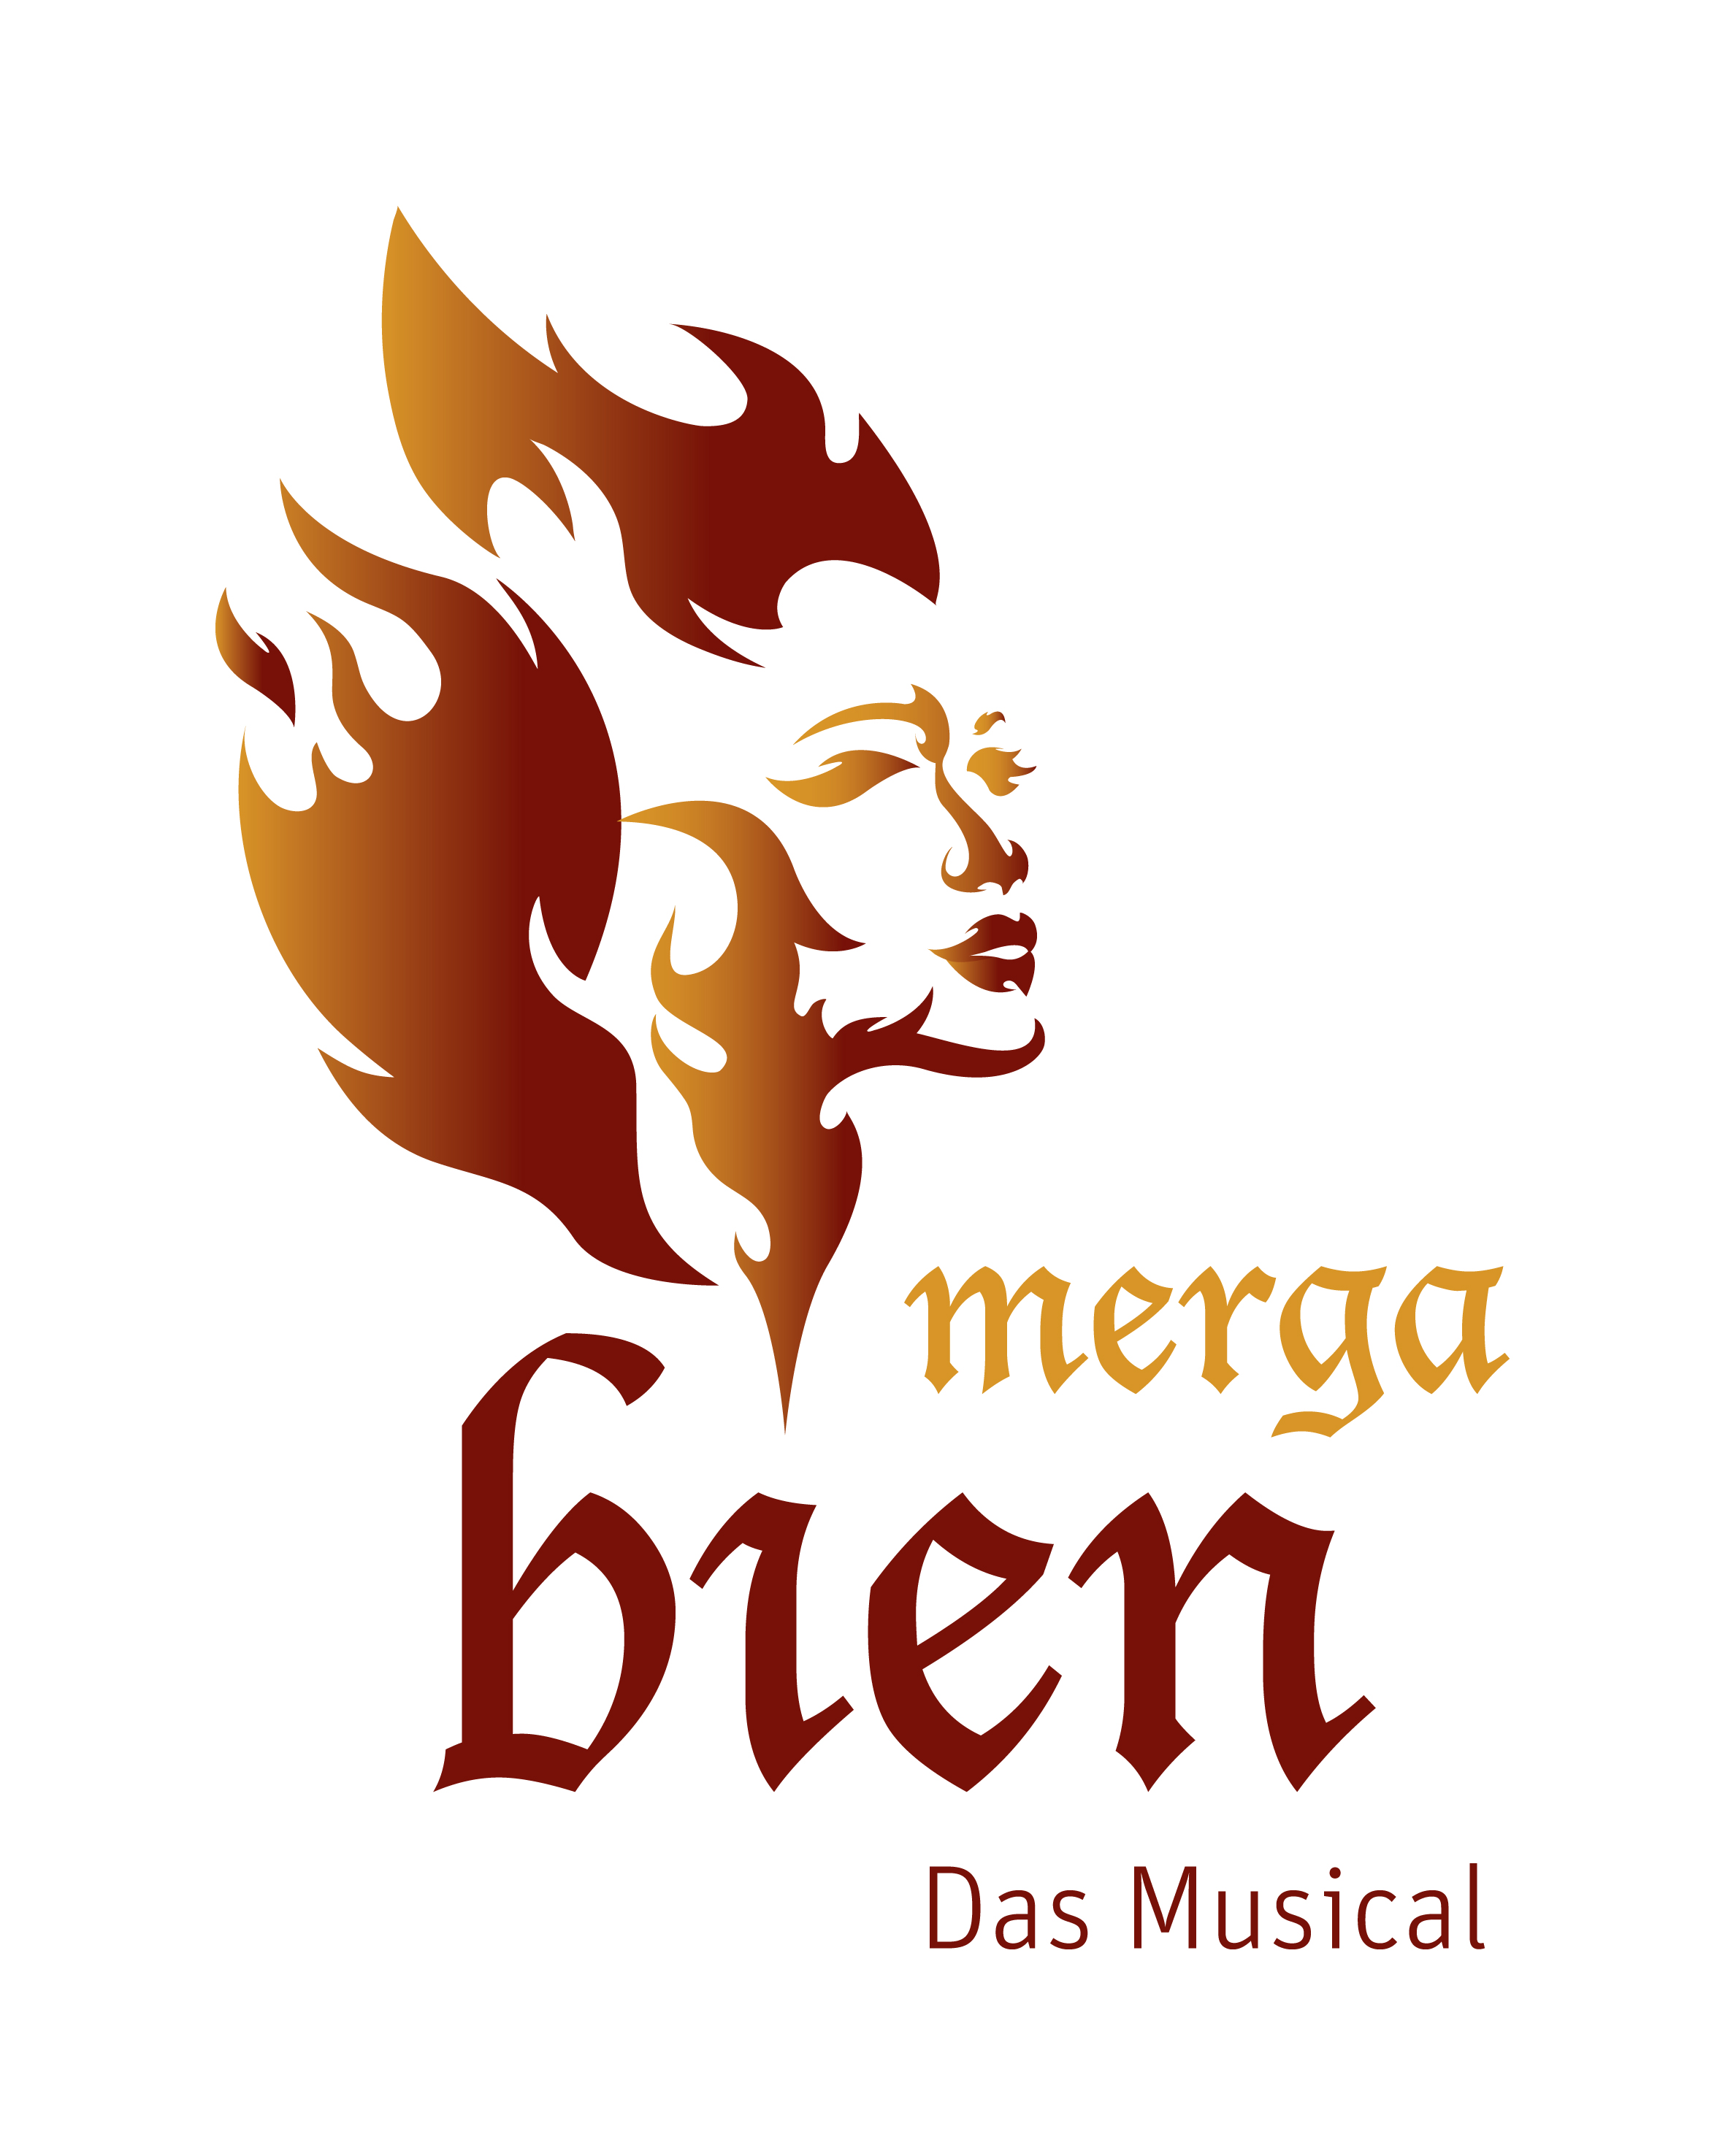 MERGA logo